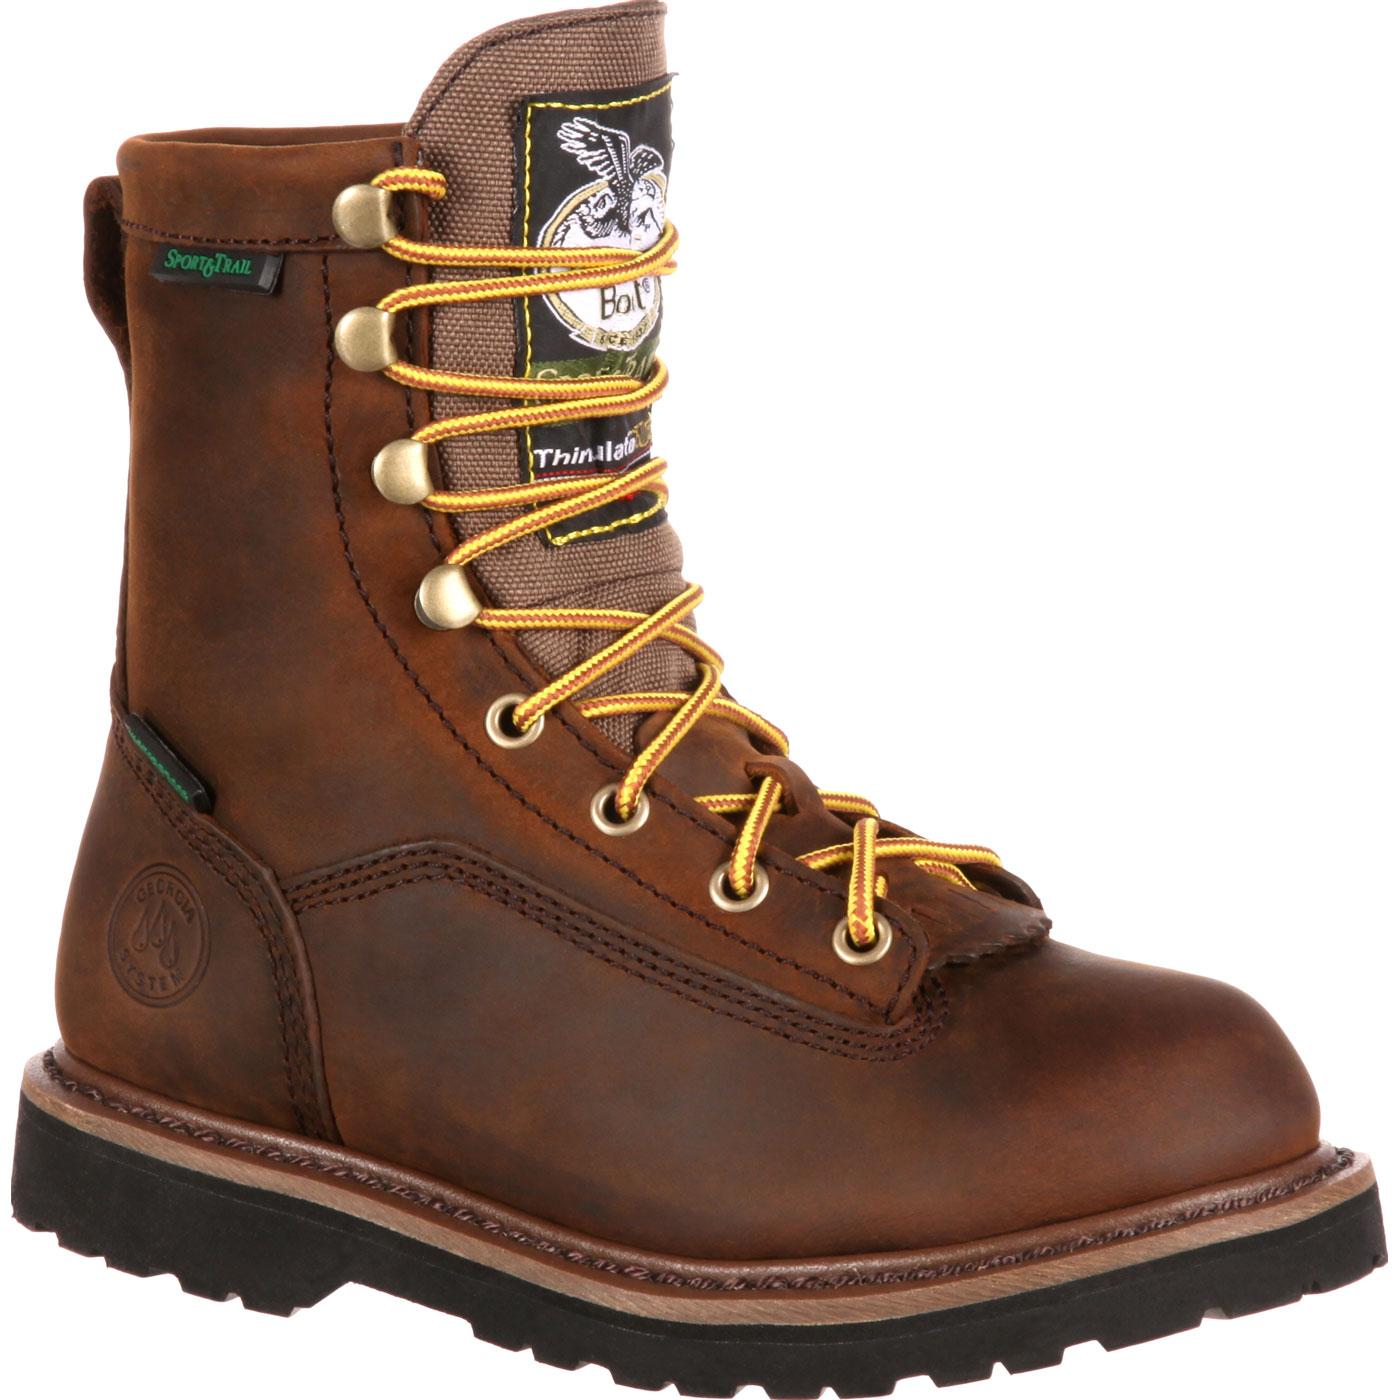 waterproof logger boots